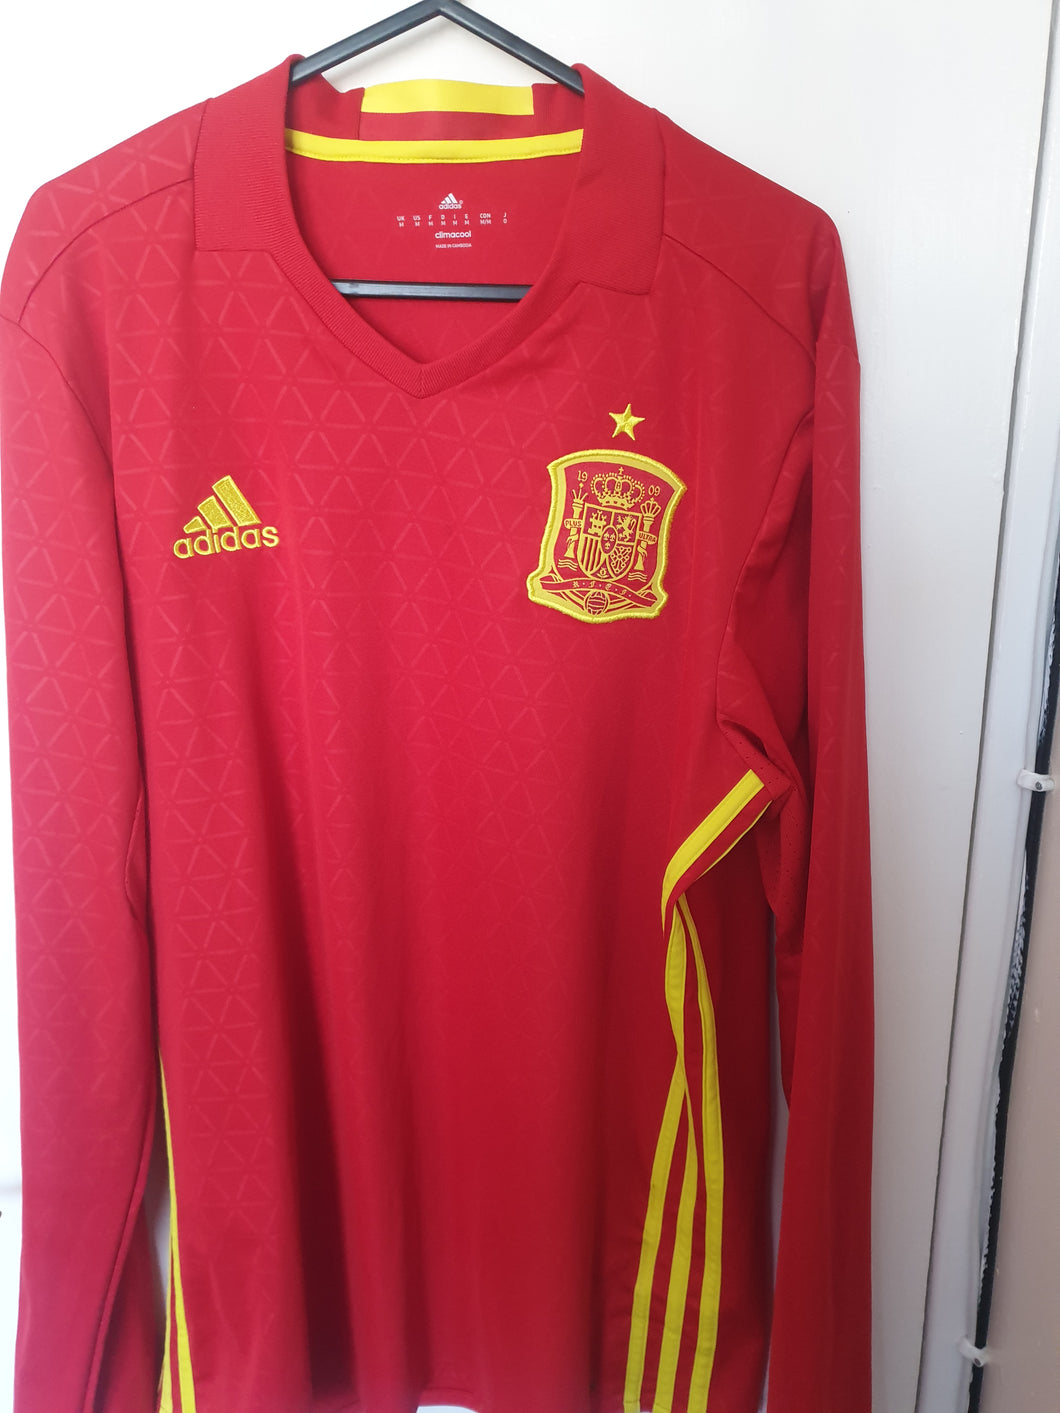 Spain National Team 2016-17 Home Shirt Long Sleeve(Size Medium)